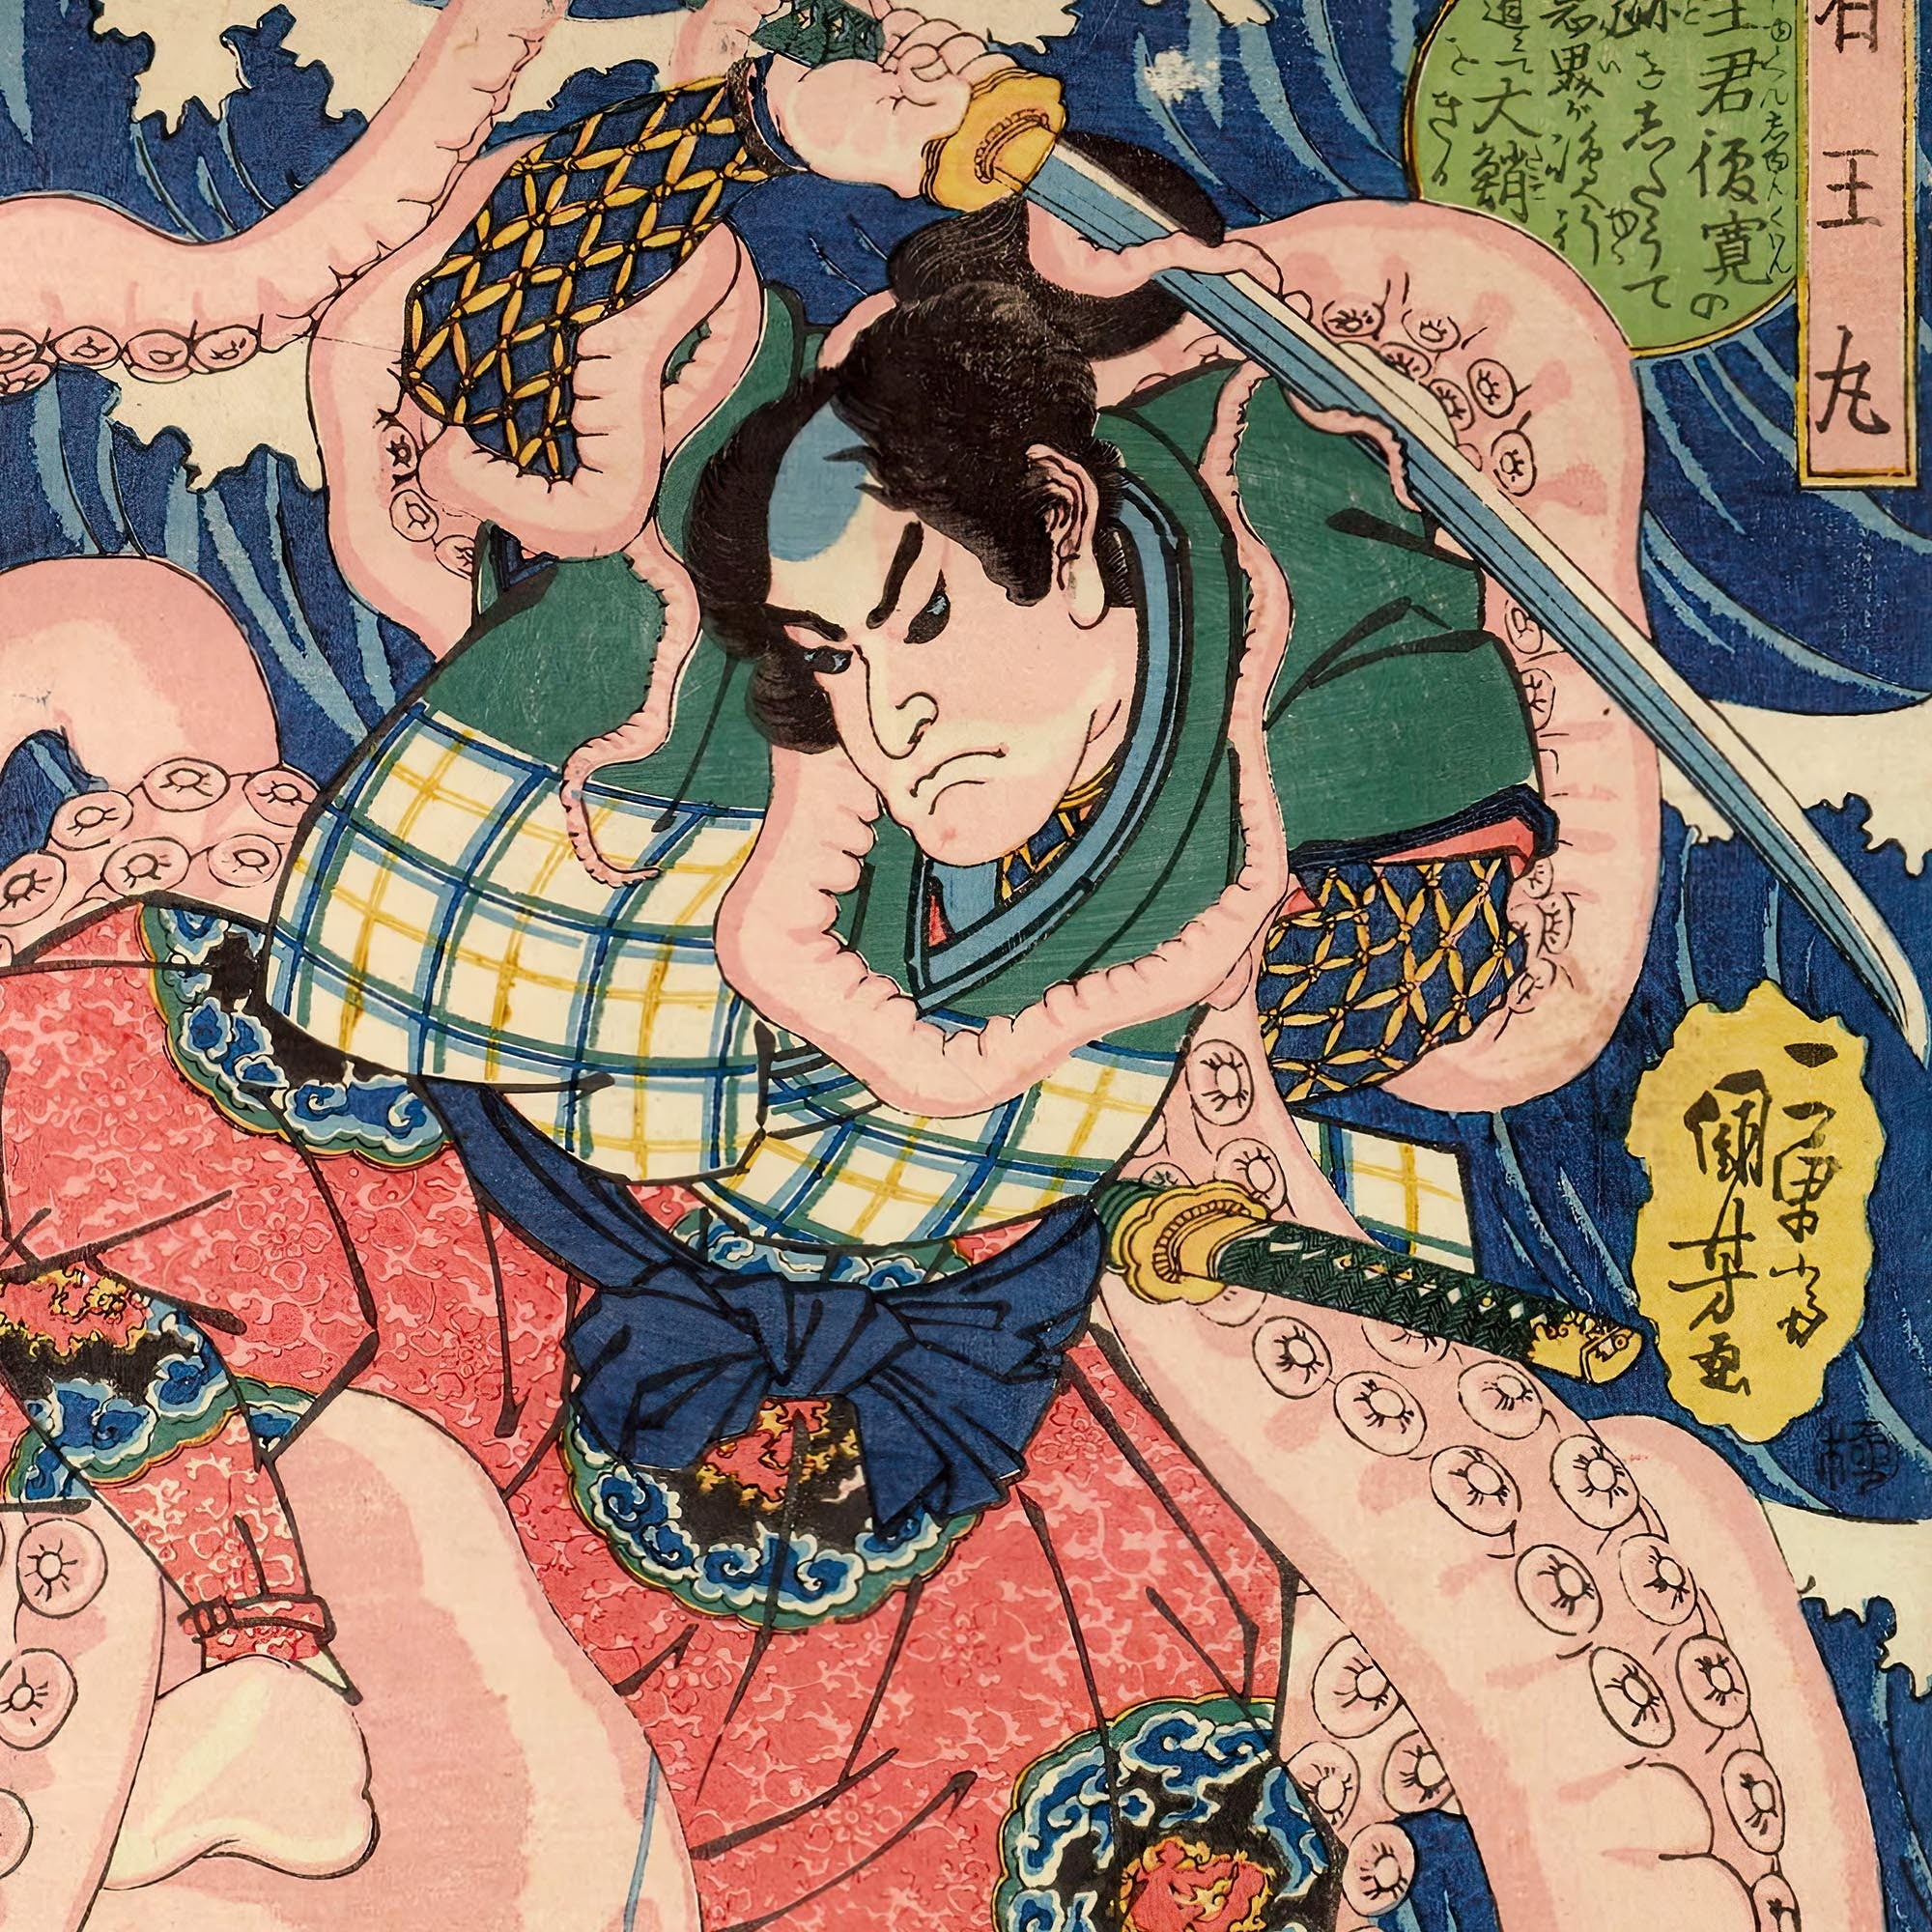 T-shirt Ario-Maru Fighting a Giant Octopus with a Sword on the Seashore | Utagawa Kuniyoshi Japanese Vintage Woodblock Ukiyo-e Samurai T-Shirt Tee